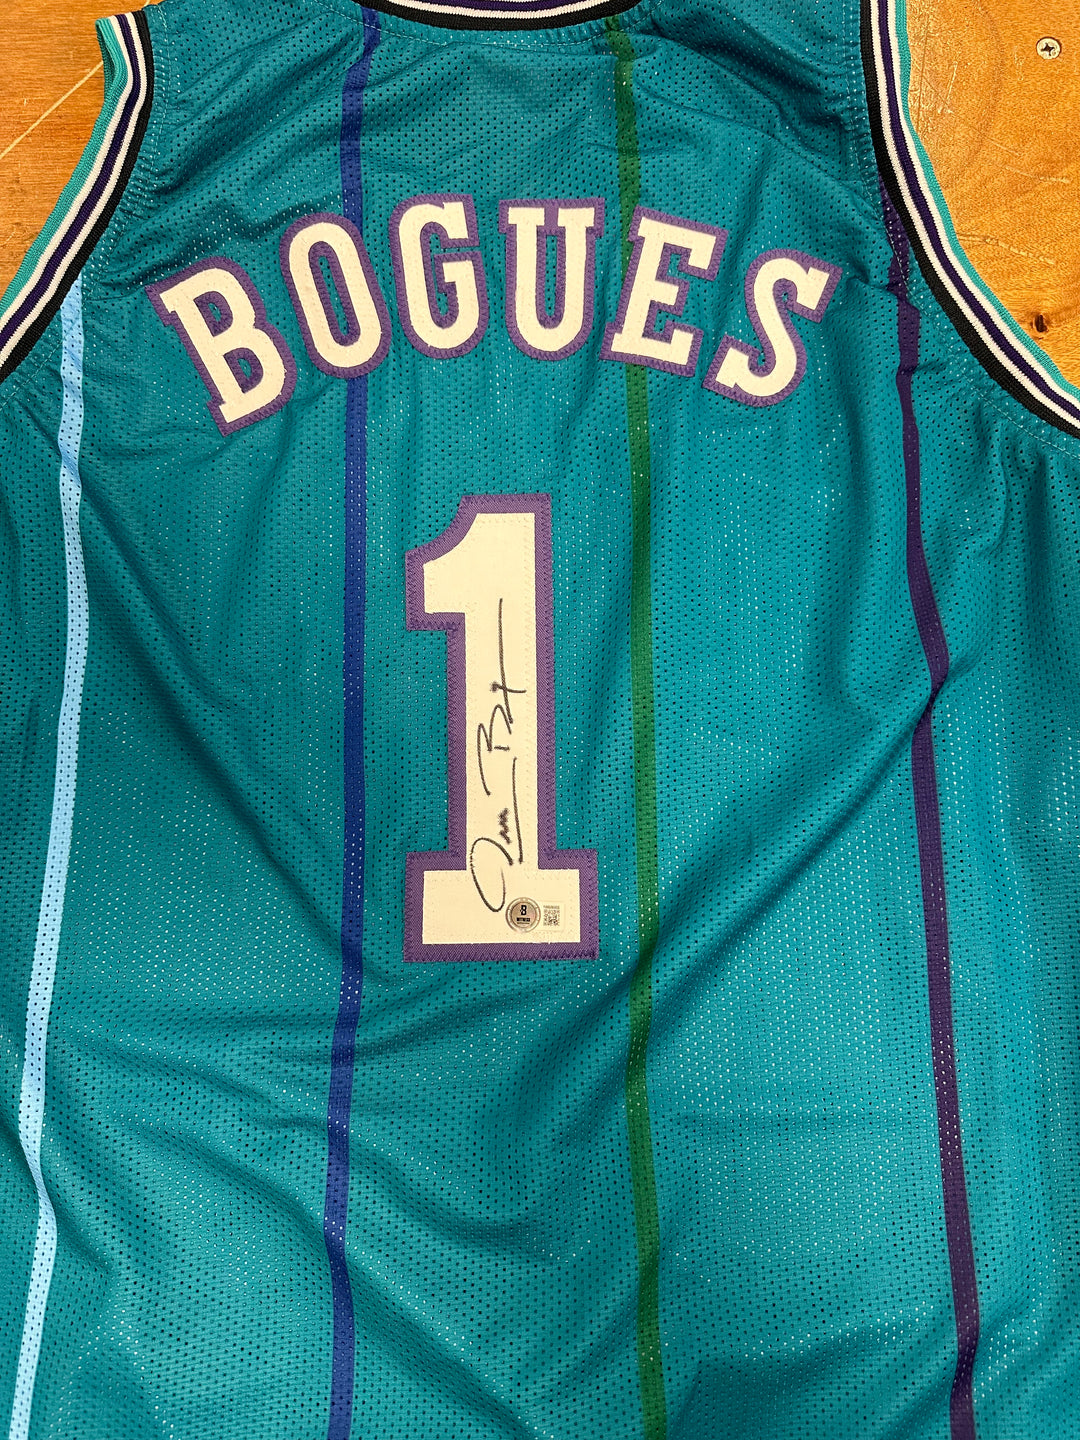 Muggsy Bogues signed custom jersey